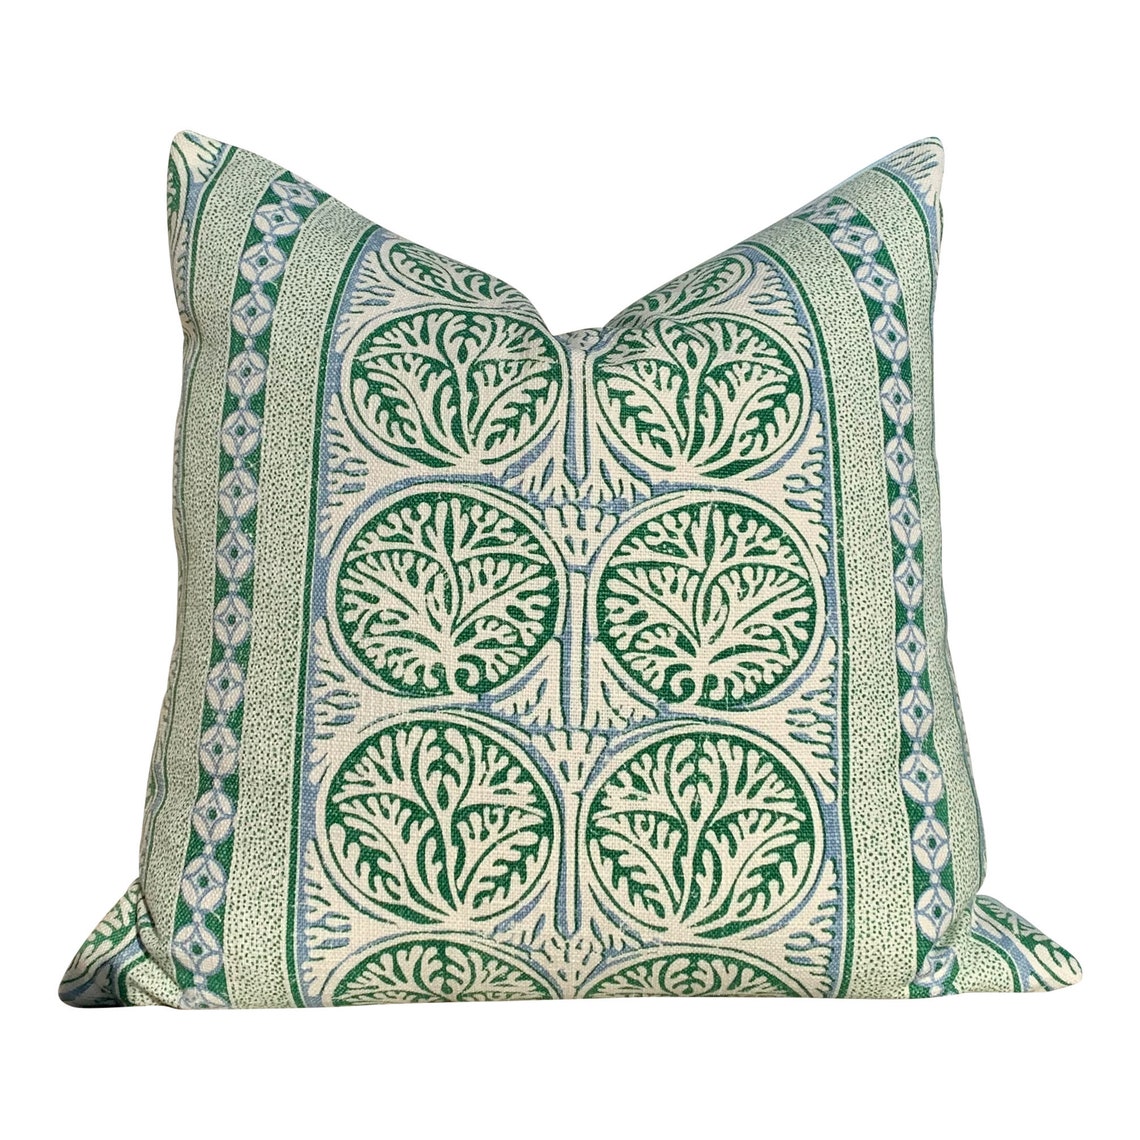 Thibaut Fair Isle Pillow in Green and Light Blue. Lumbar image 1